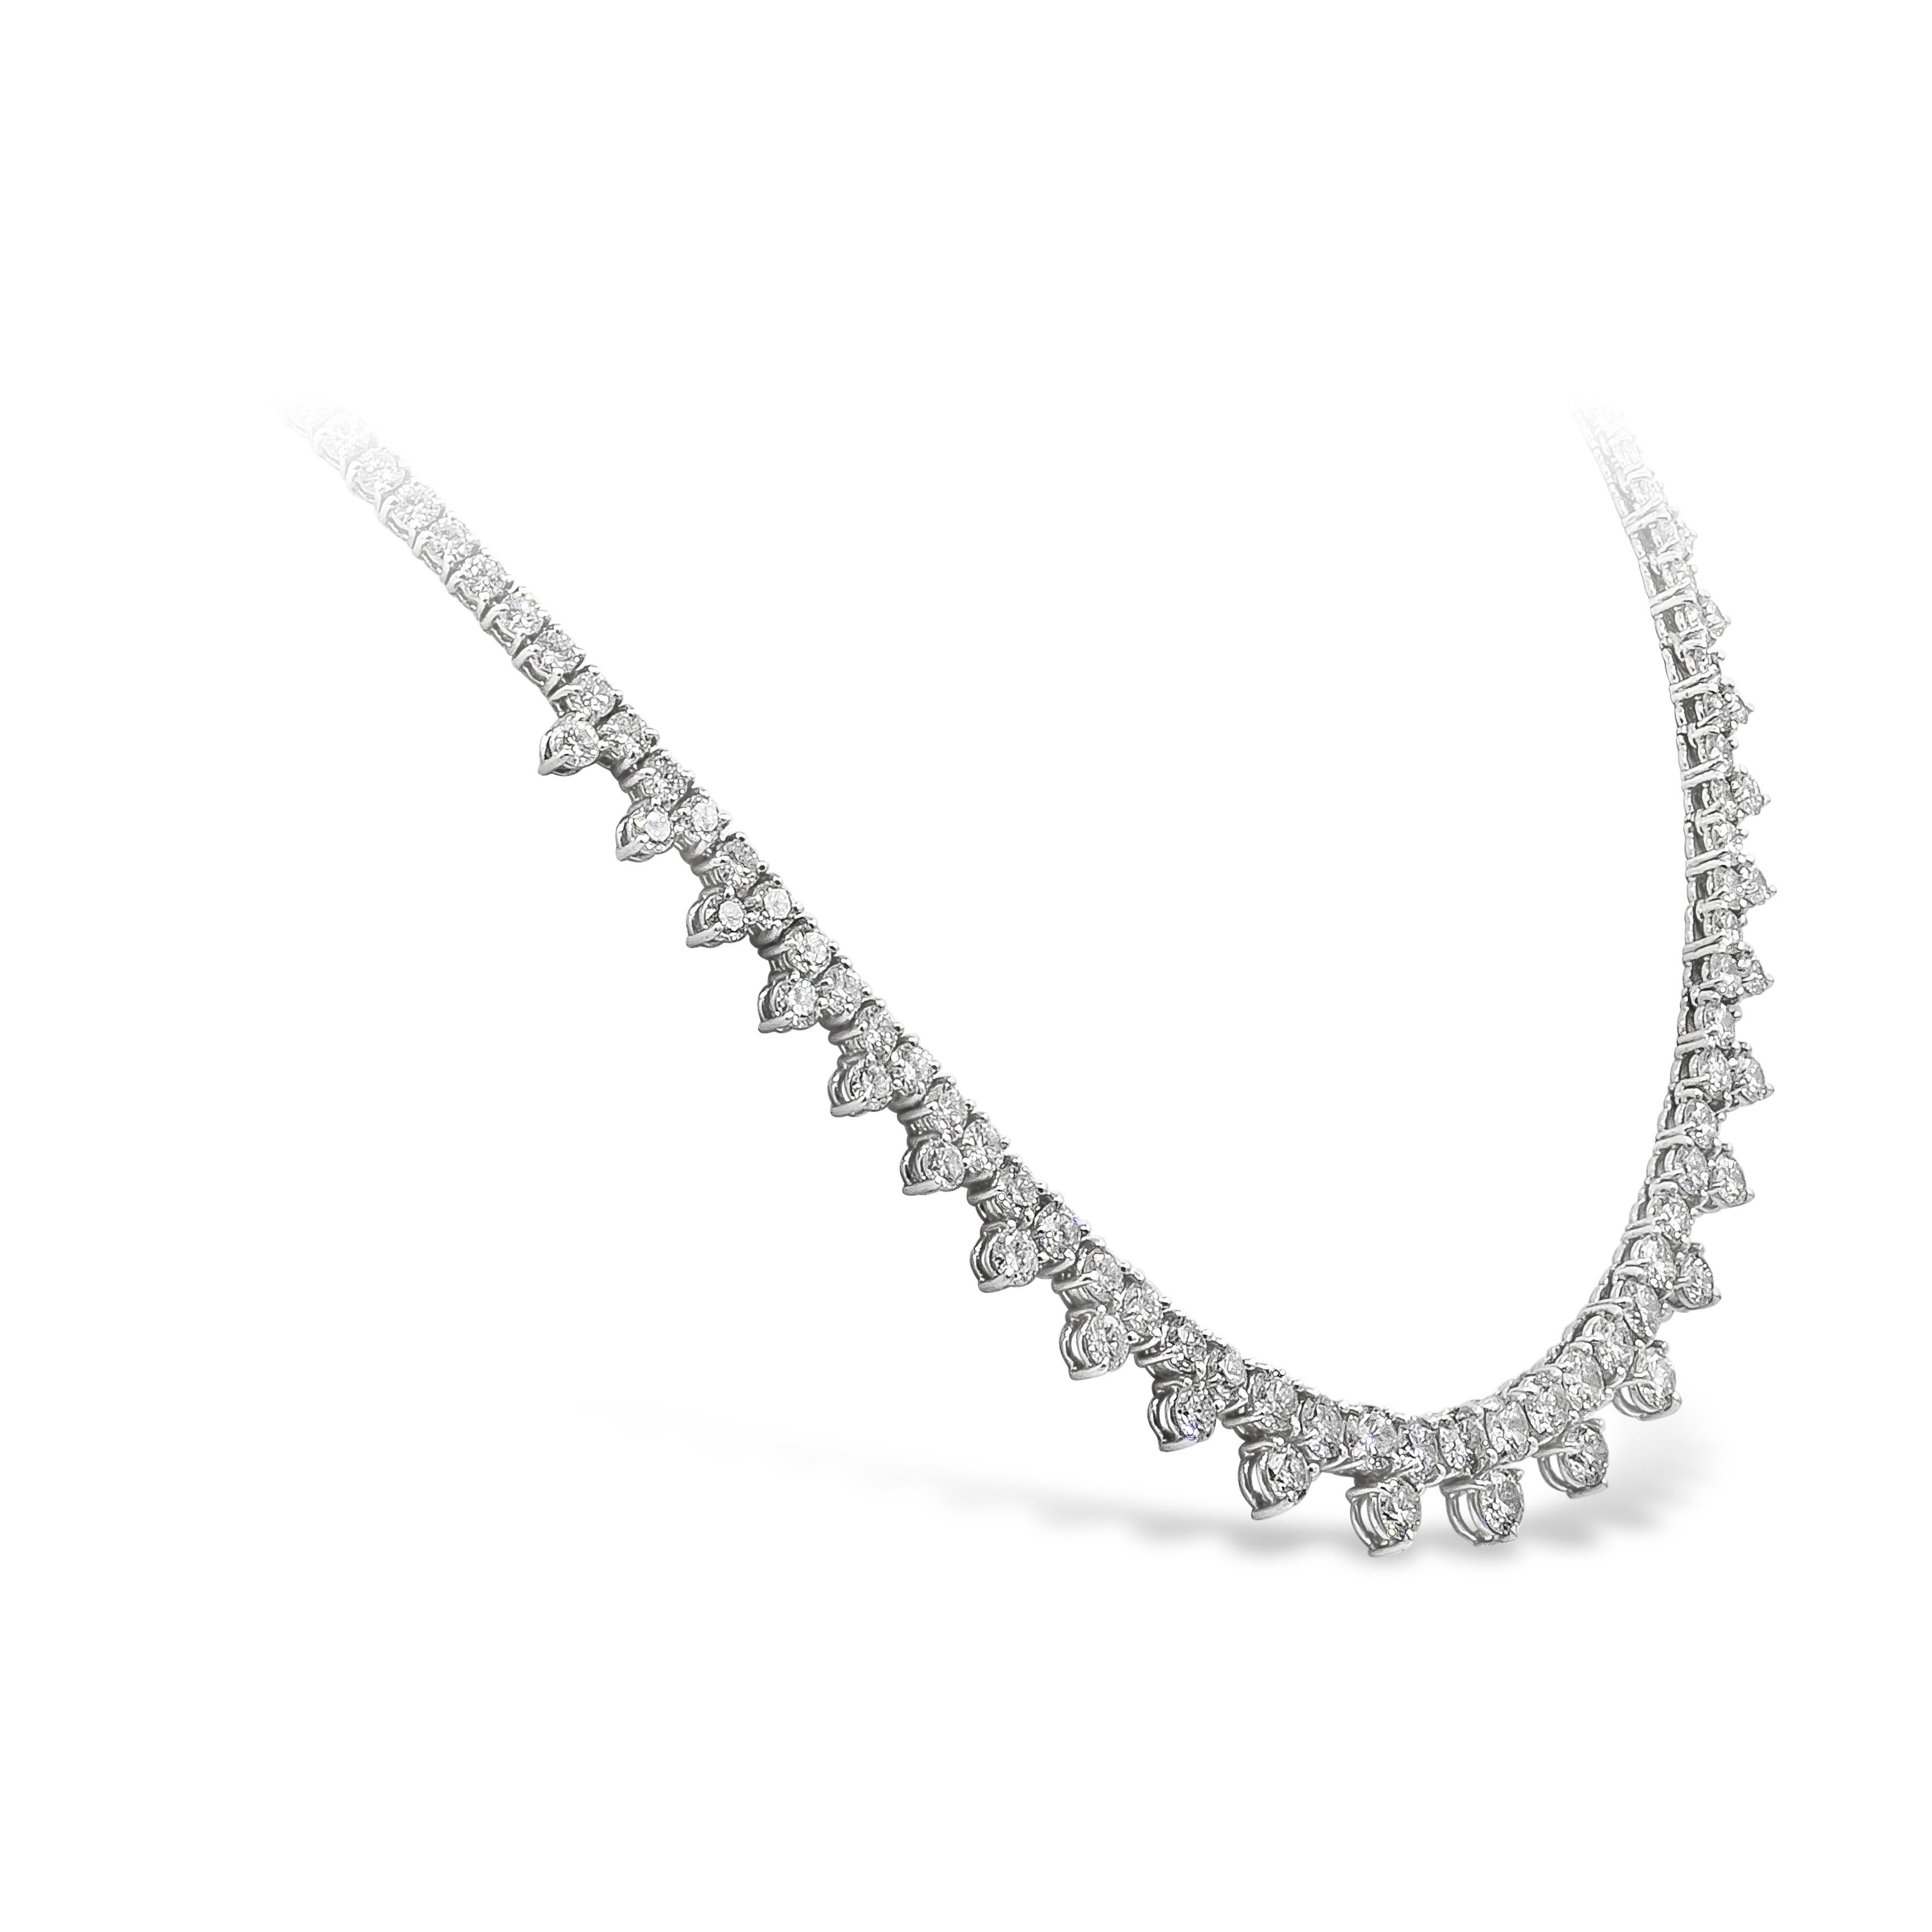 Contemporain Roman Malakov, collier tennis en diamants taille ronde brillants de 20.74 carats au total en vente